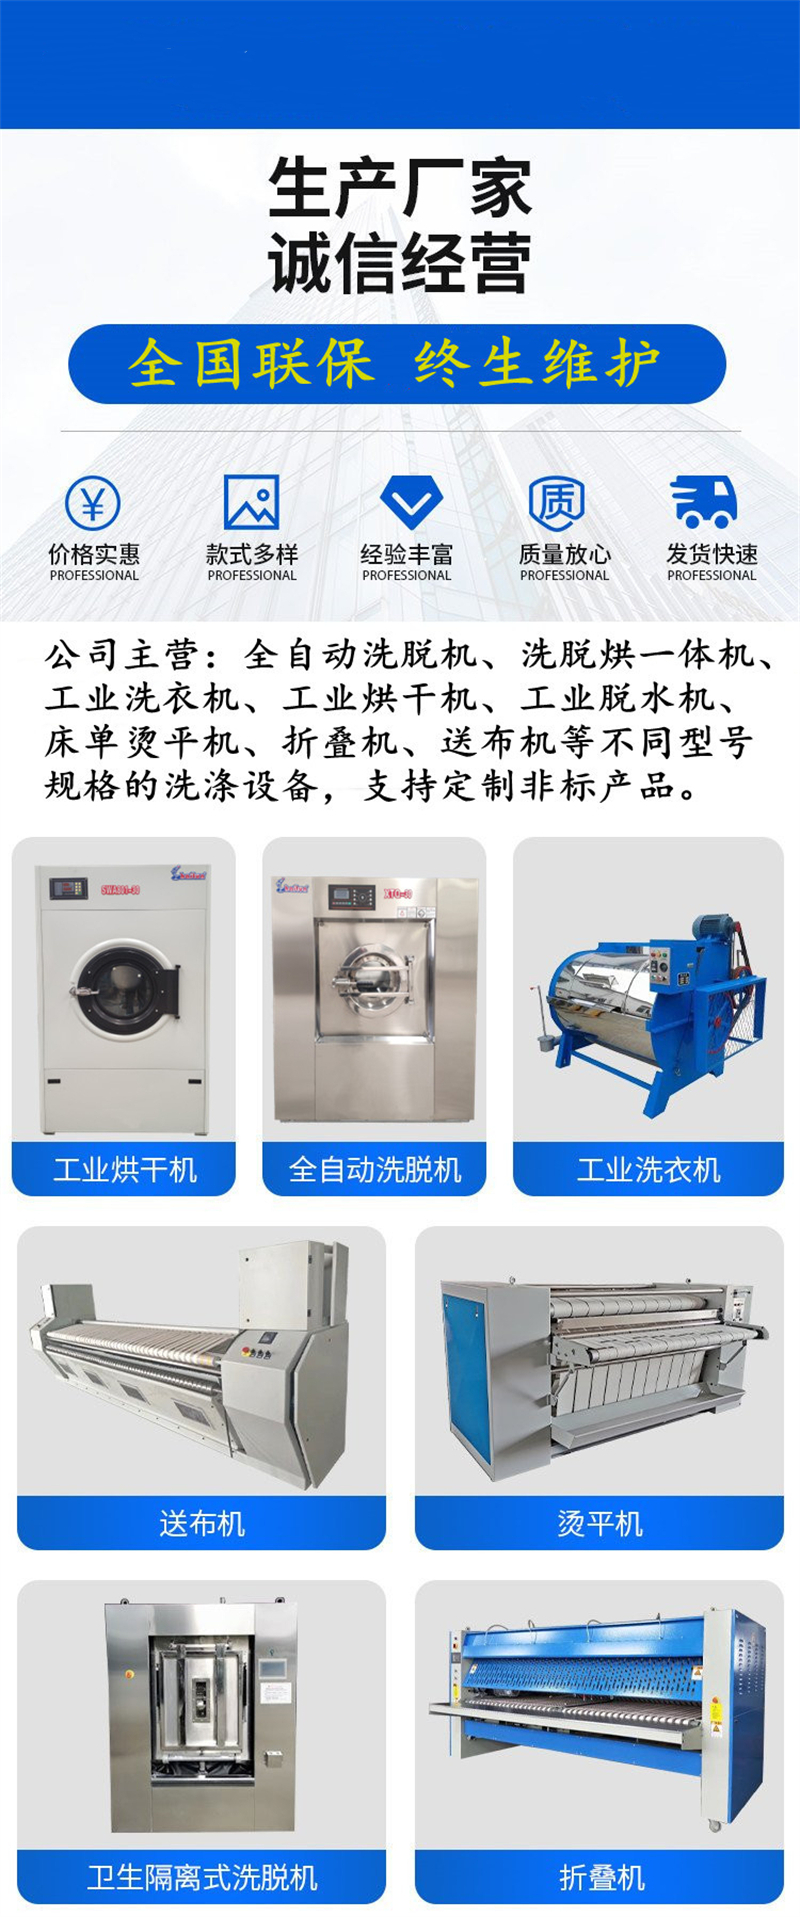 100kg semi-automatic horizontal industrial washing machine, fruit and vegetable drum washing machine, work clothes washing equipment